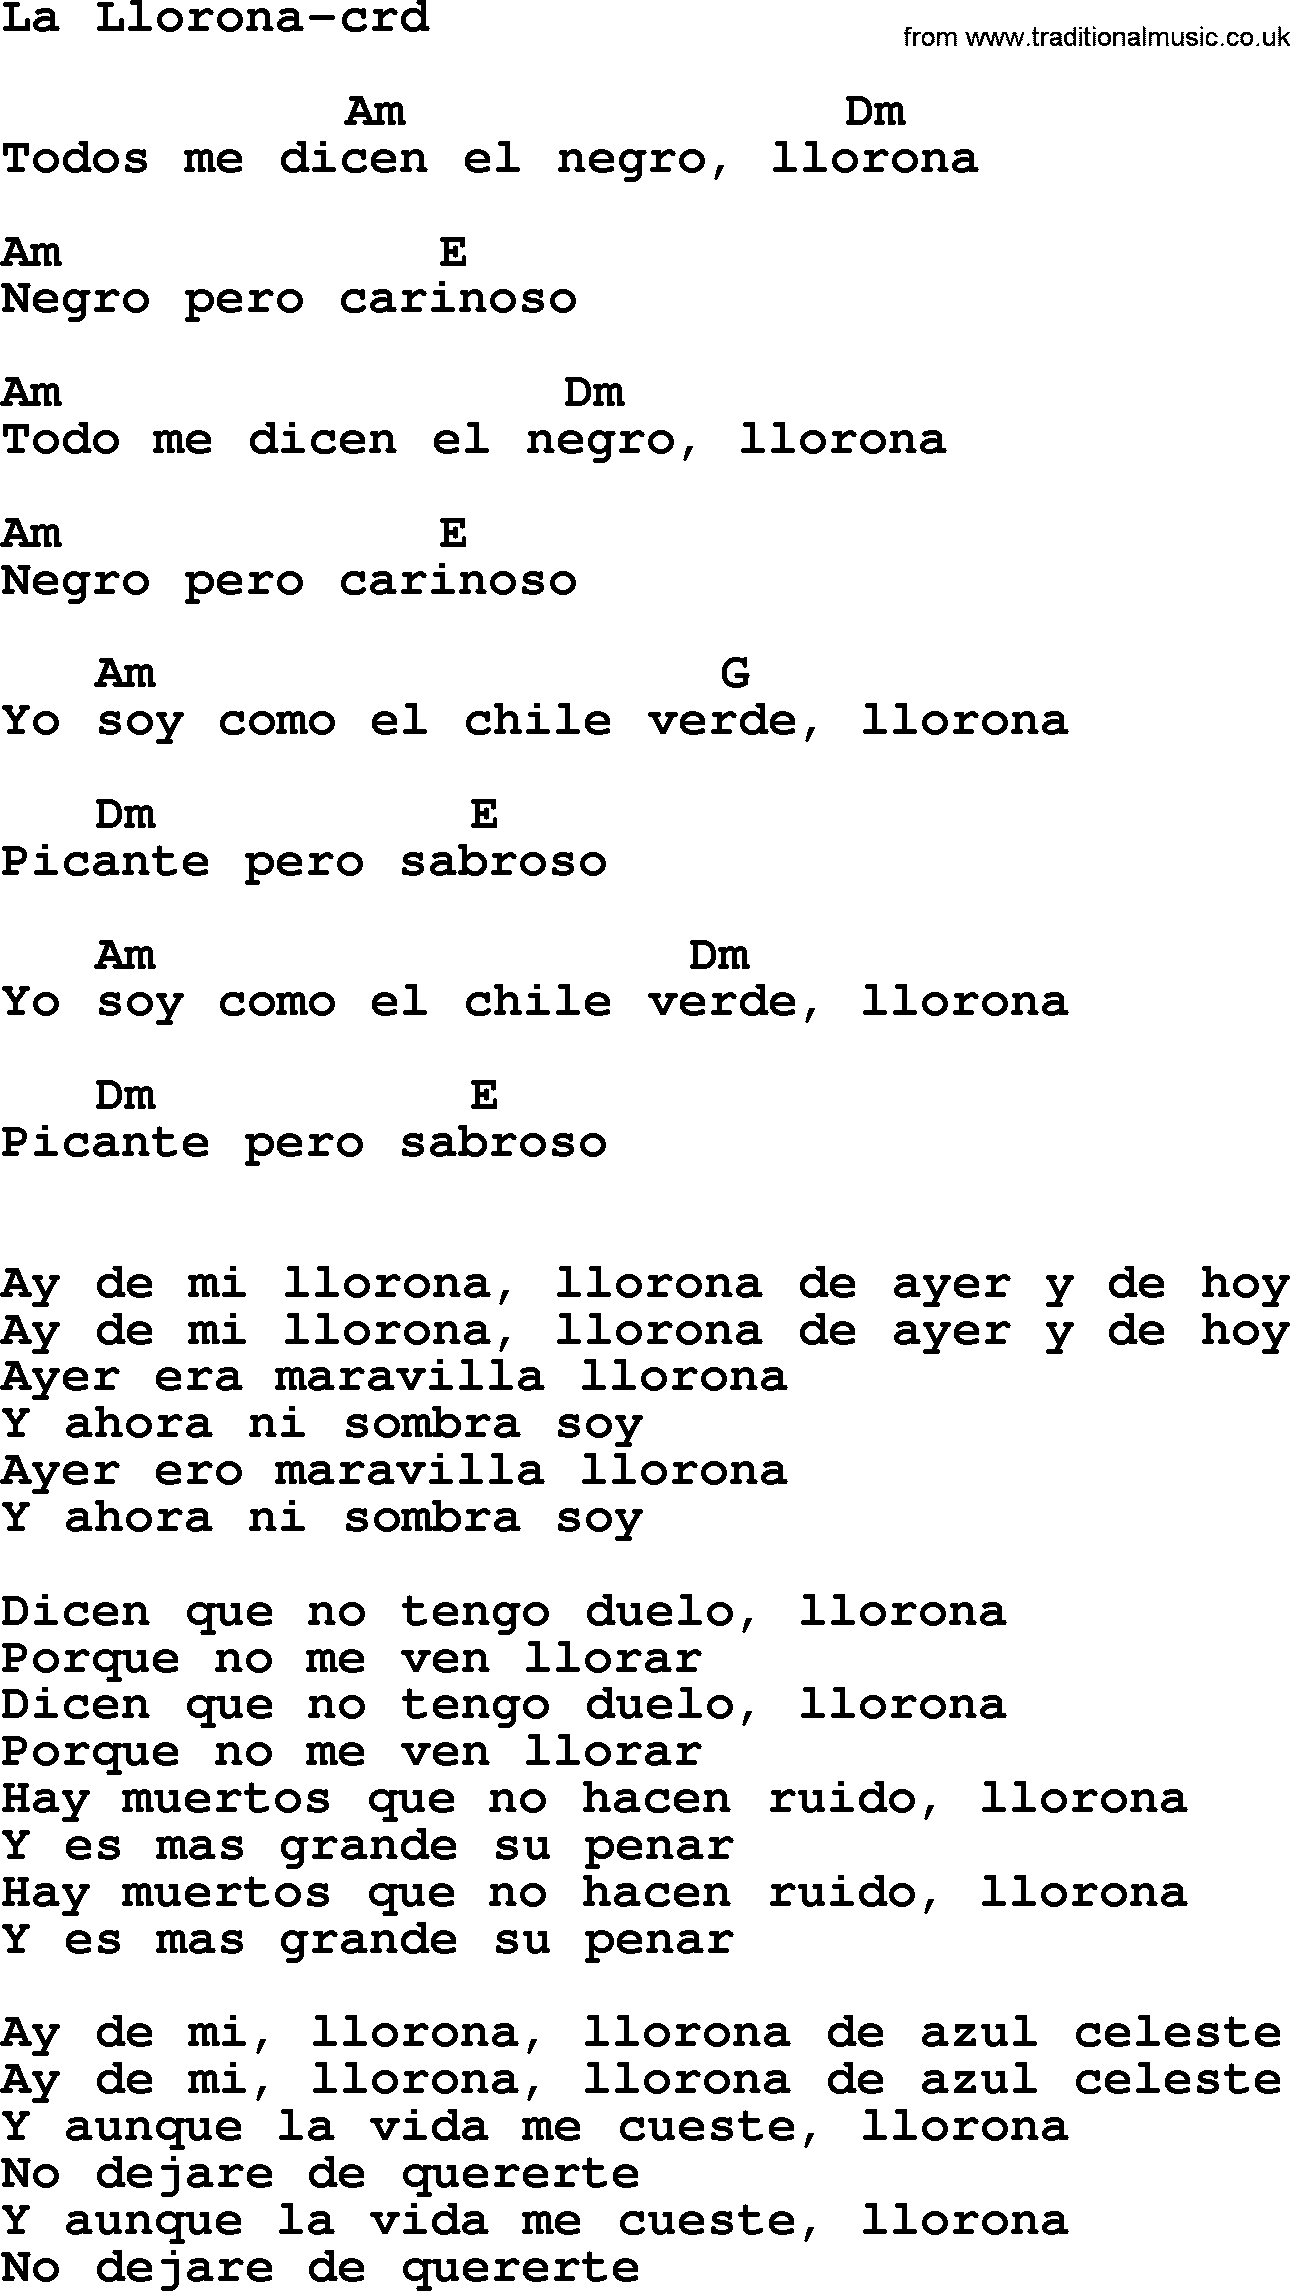 Joan Baez song La Llorona lyrics and chords